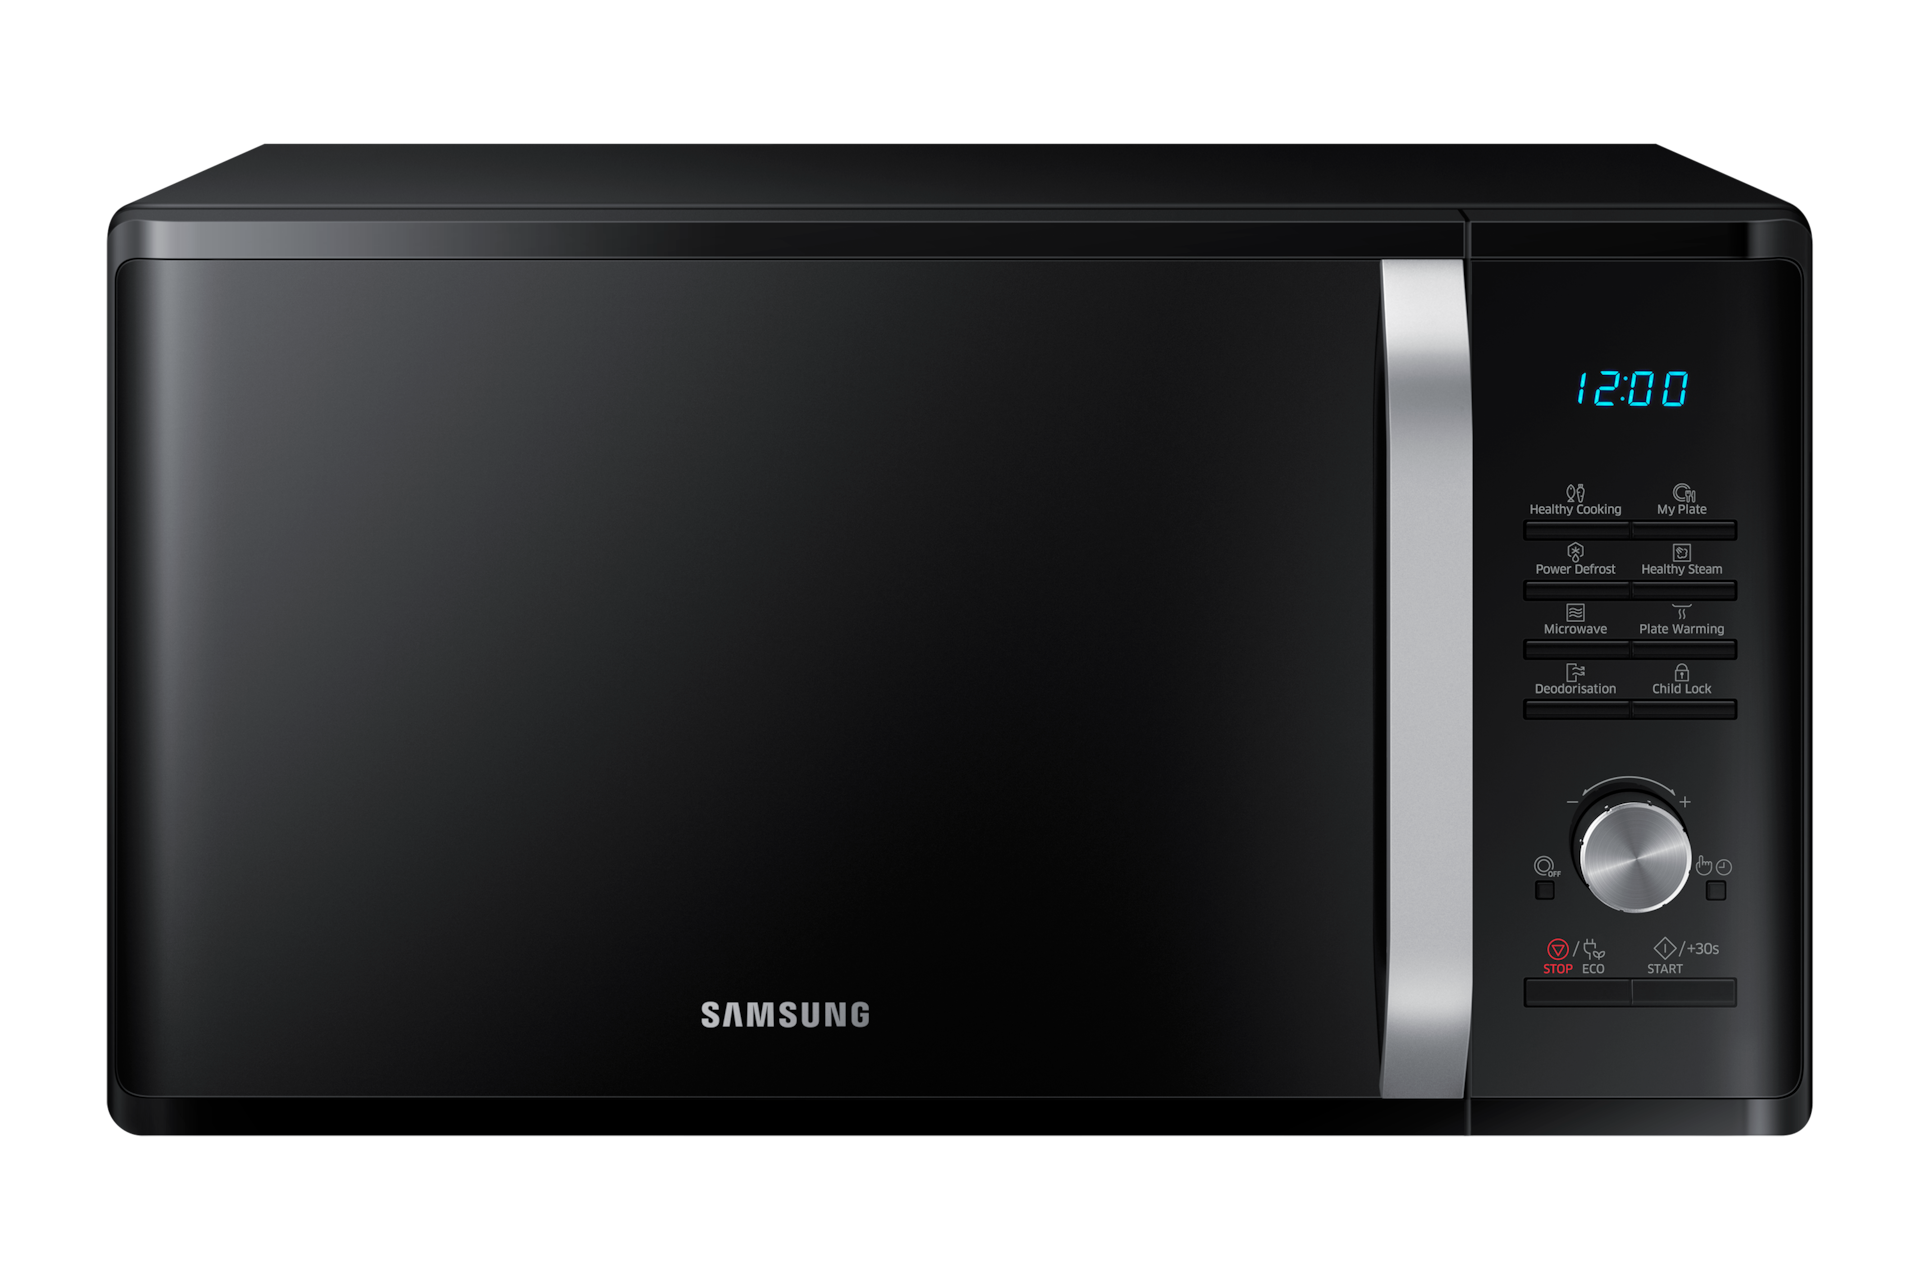 Samsung Microwave - 28L Microwave Oven Price & Specs (MS28J5255UB